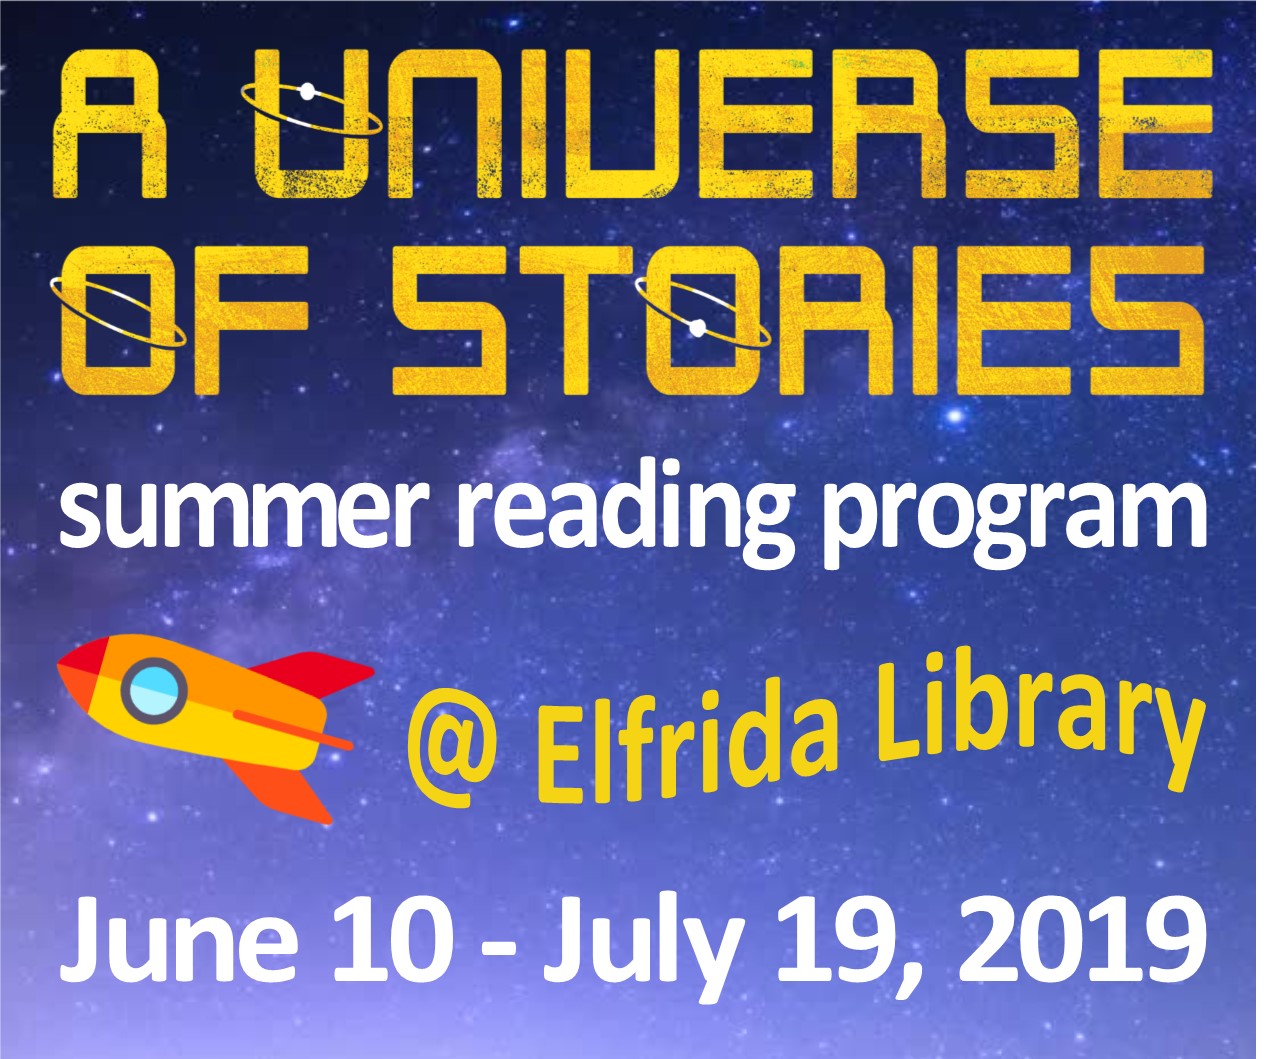 Elfrida Library Summer Reading Program picture